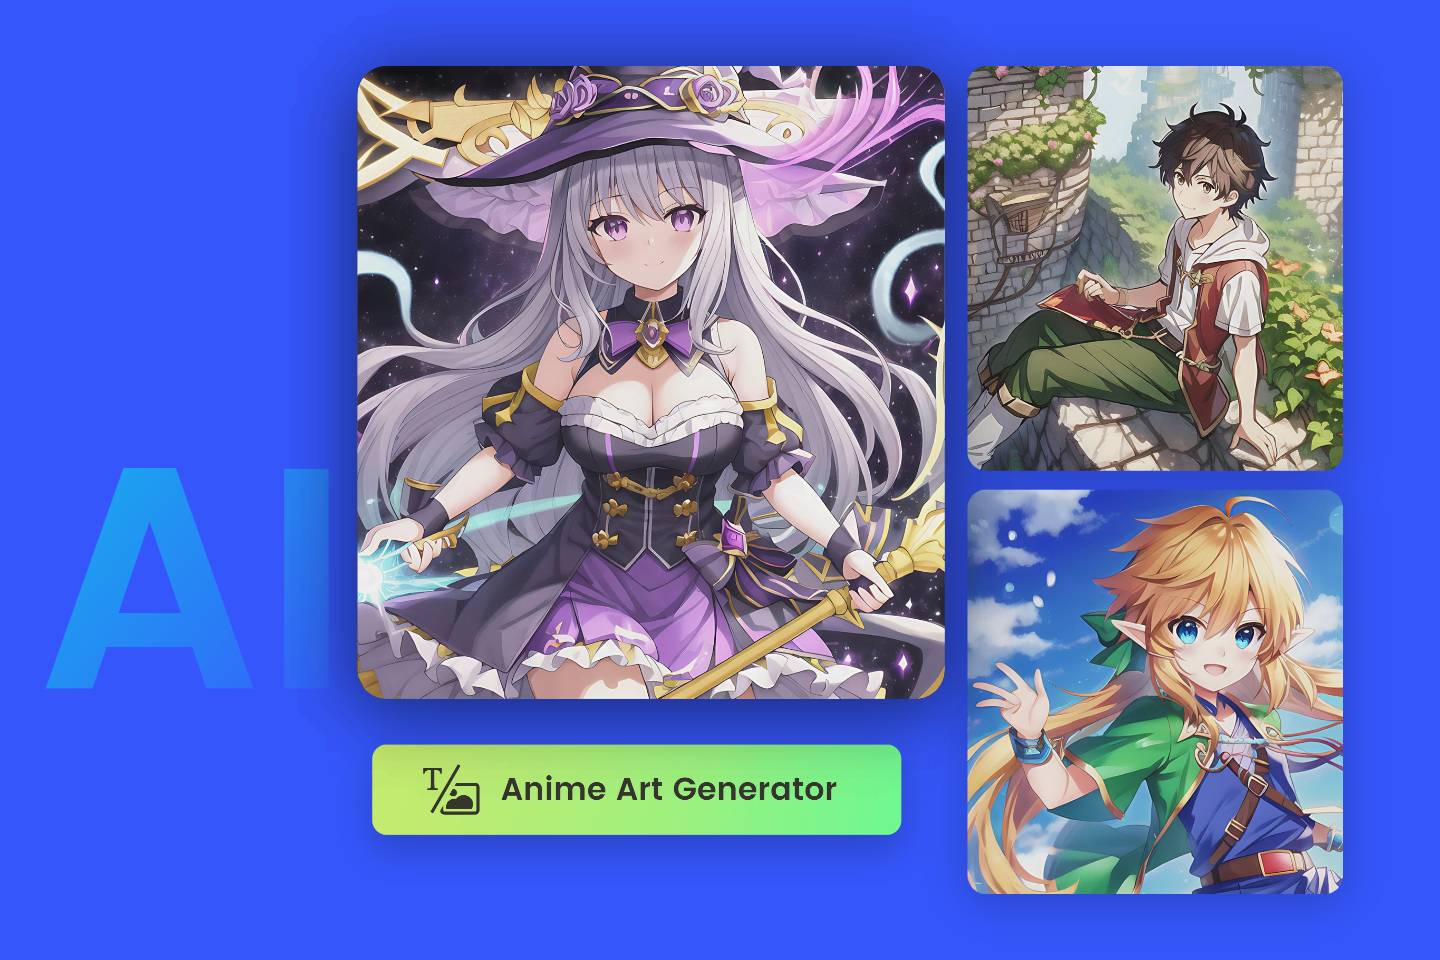 Anime art Vectors & Illustrations for Free Download | Freepik